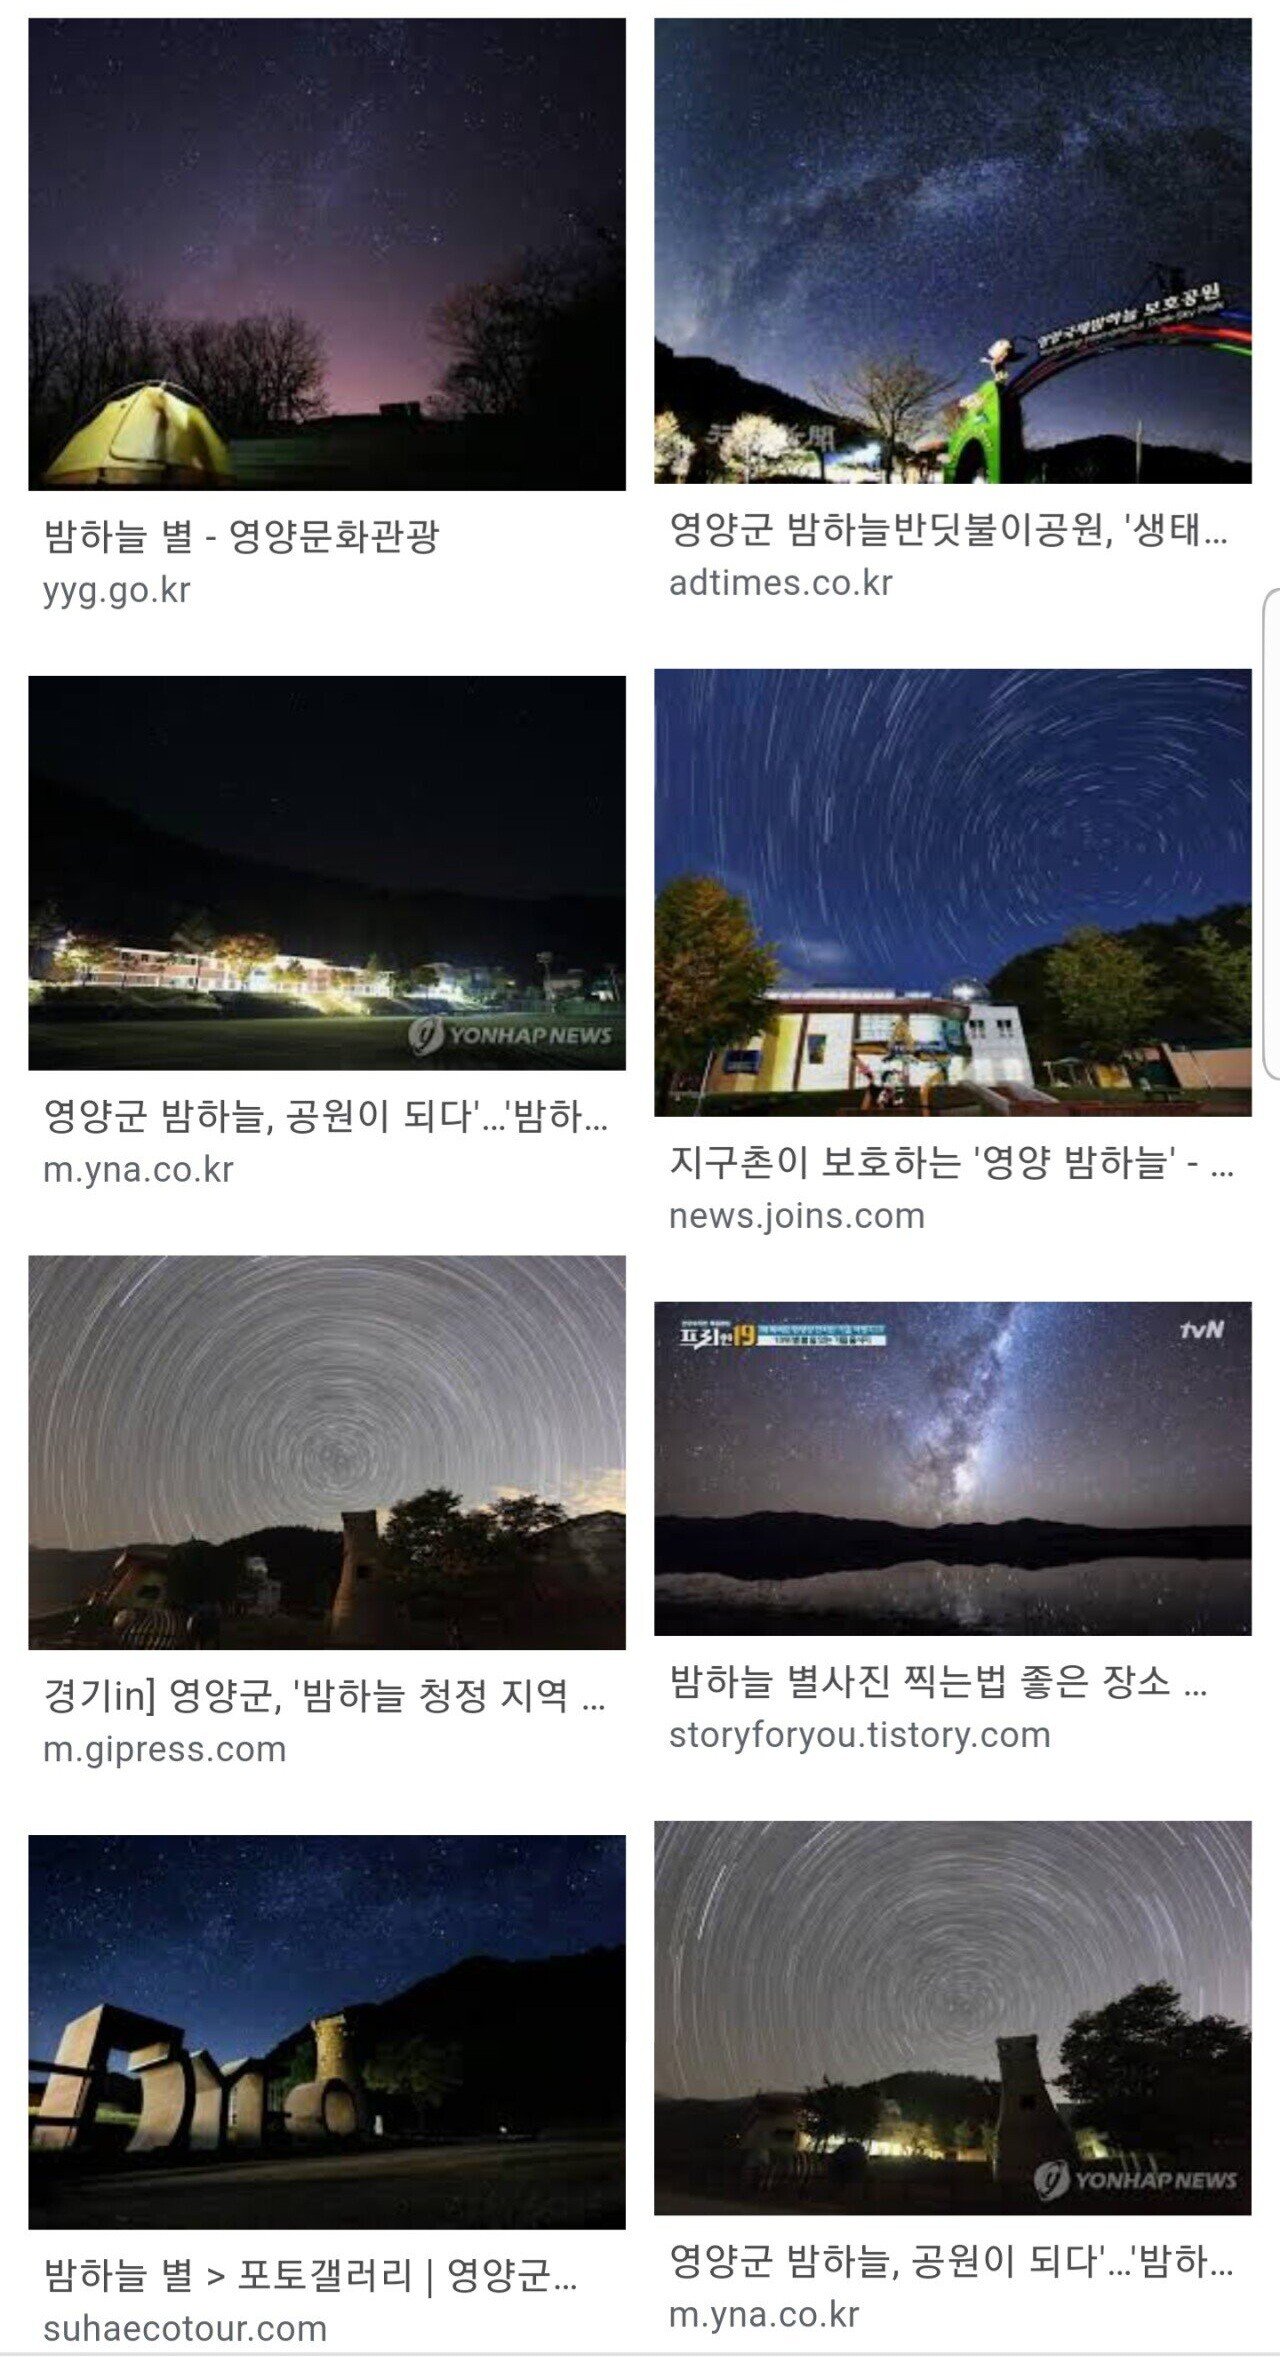 6b1d7ba1ba4edeccd993153dcb76803b.jpg 한국에서 밤하늘 풍경이 제일 아름답다고 평가받는 동네.jpg